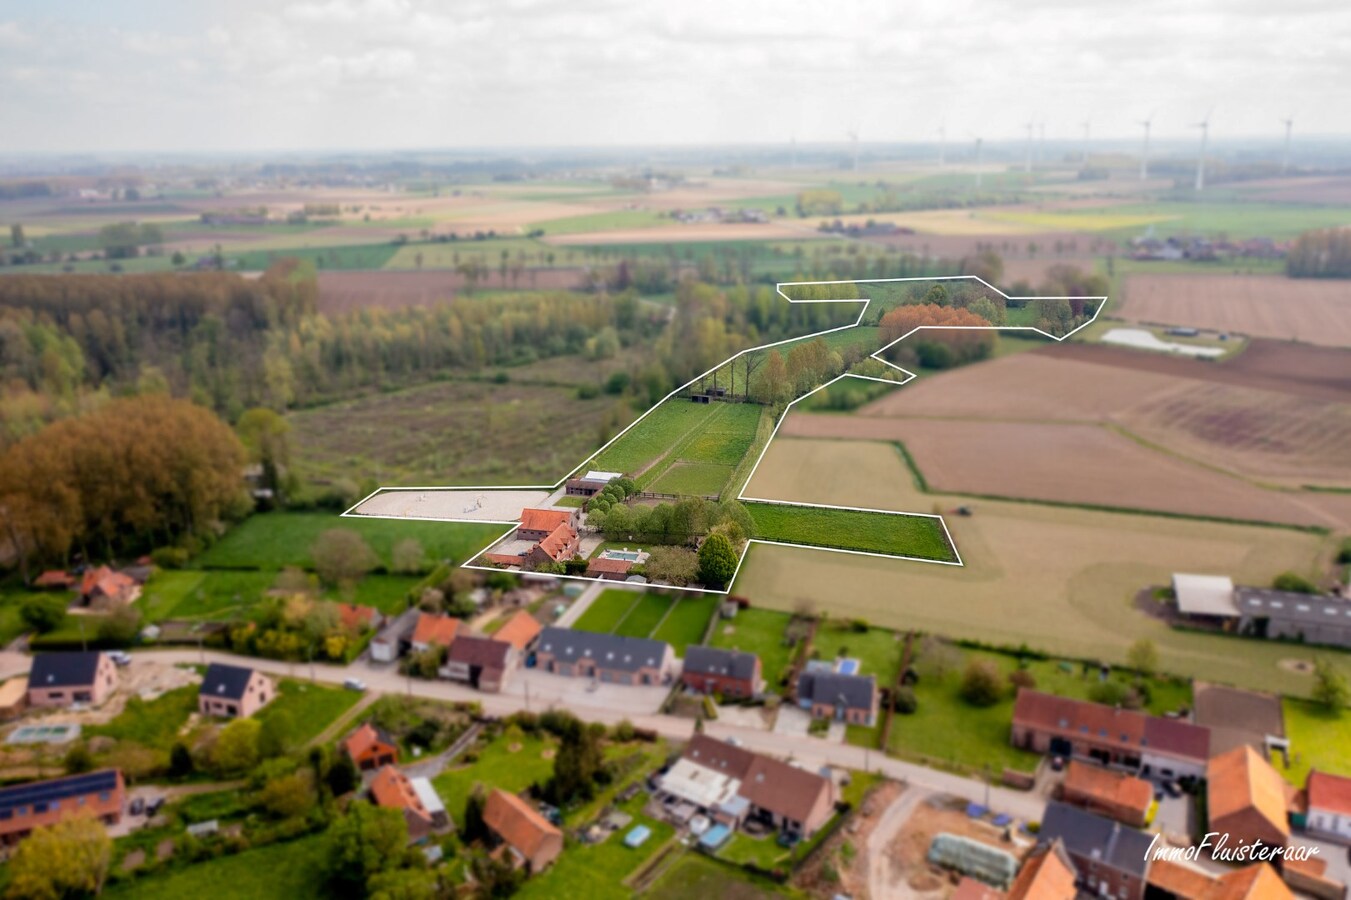 Villa for sale in Leuze-en-Hainaut